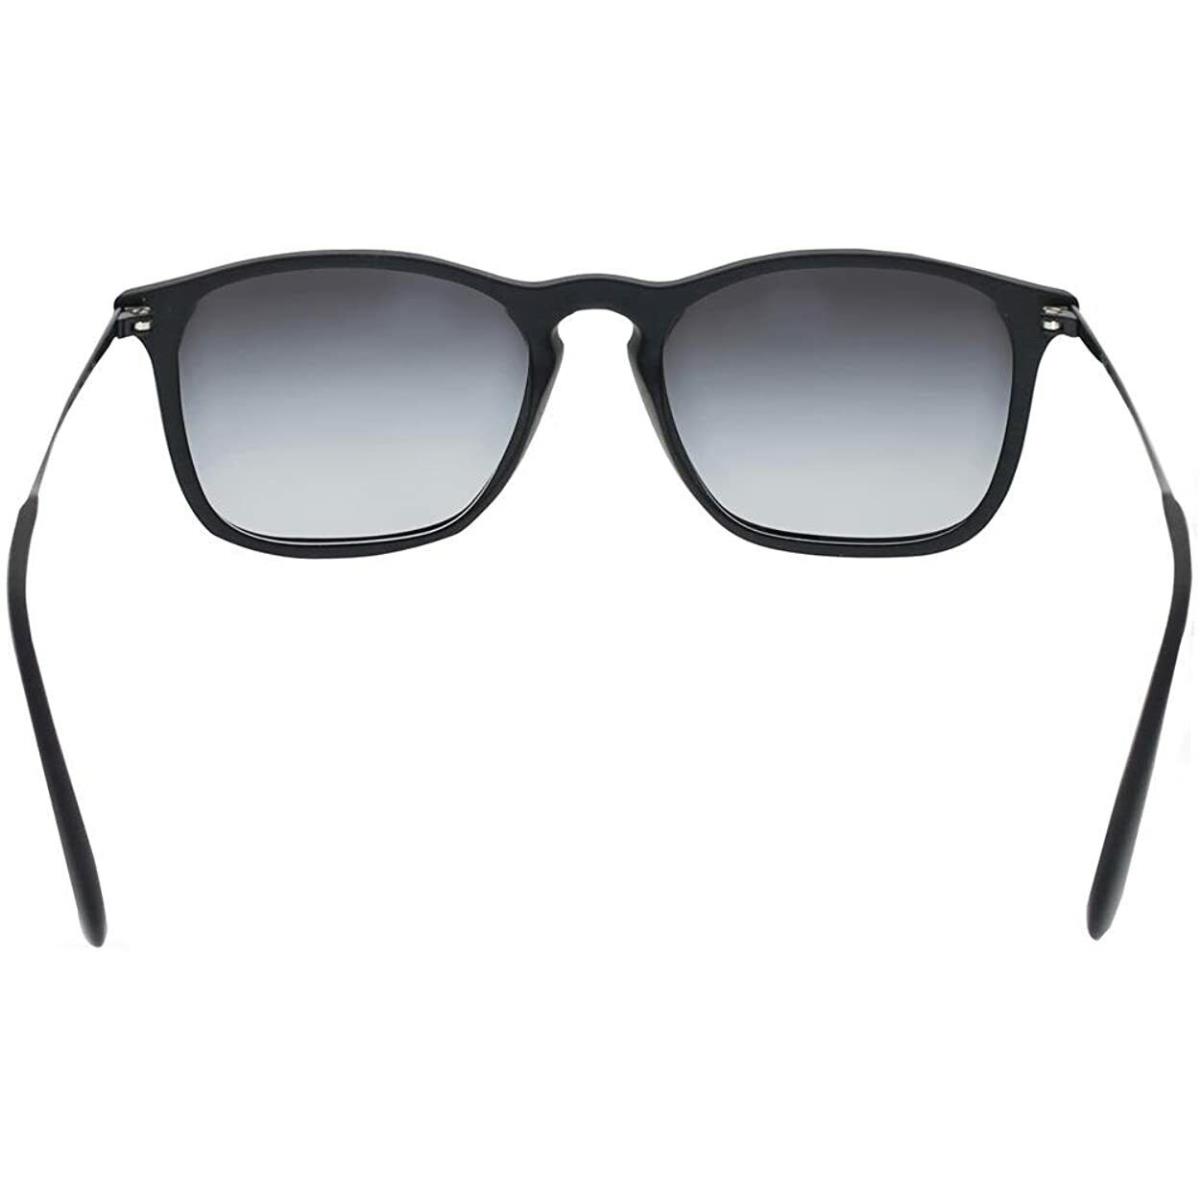 Ray-Ban sunglasses  - Frame: Black, Lens: Gray